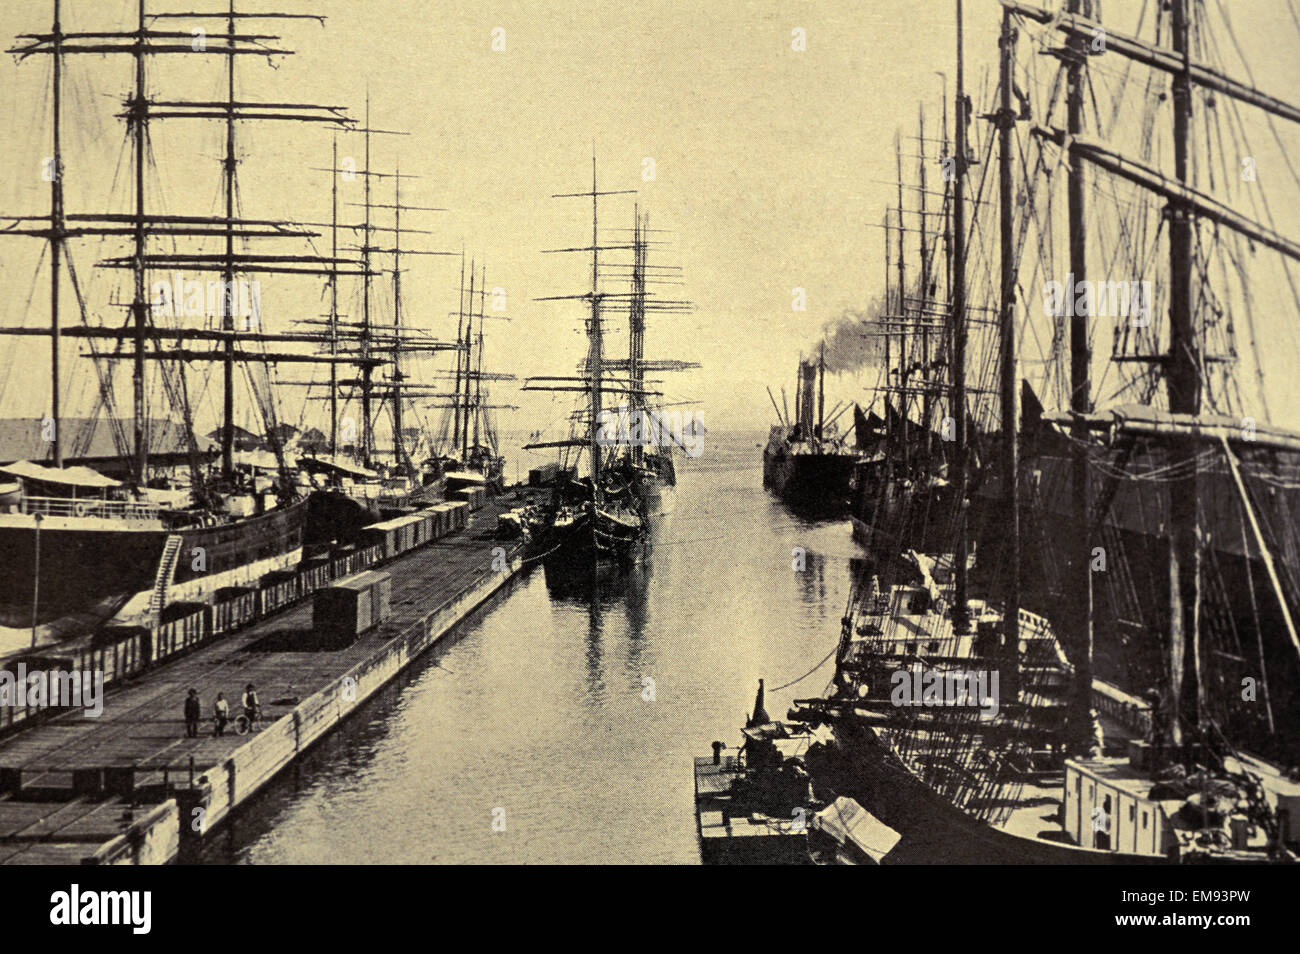 C.1900 Postcard, Hawaii, Oahu, Honolulu Harbor, Tall Ships Line The Dock. Stock Photo